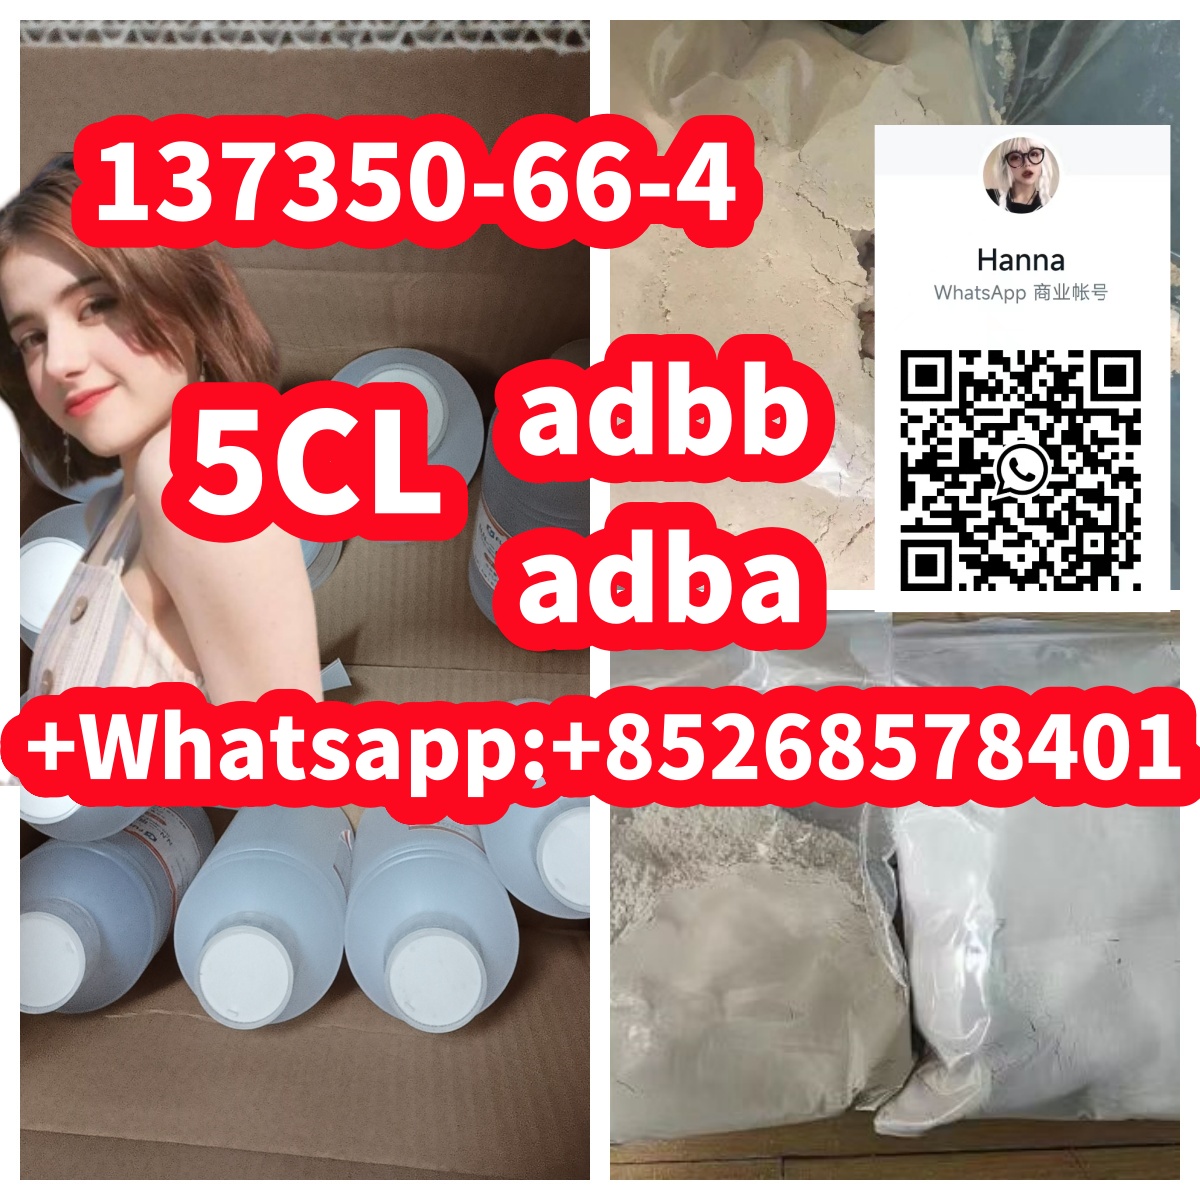 safe delivery 5CL adbb adba137350-66-4,11111,Mobiles,Accessories